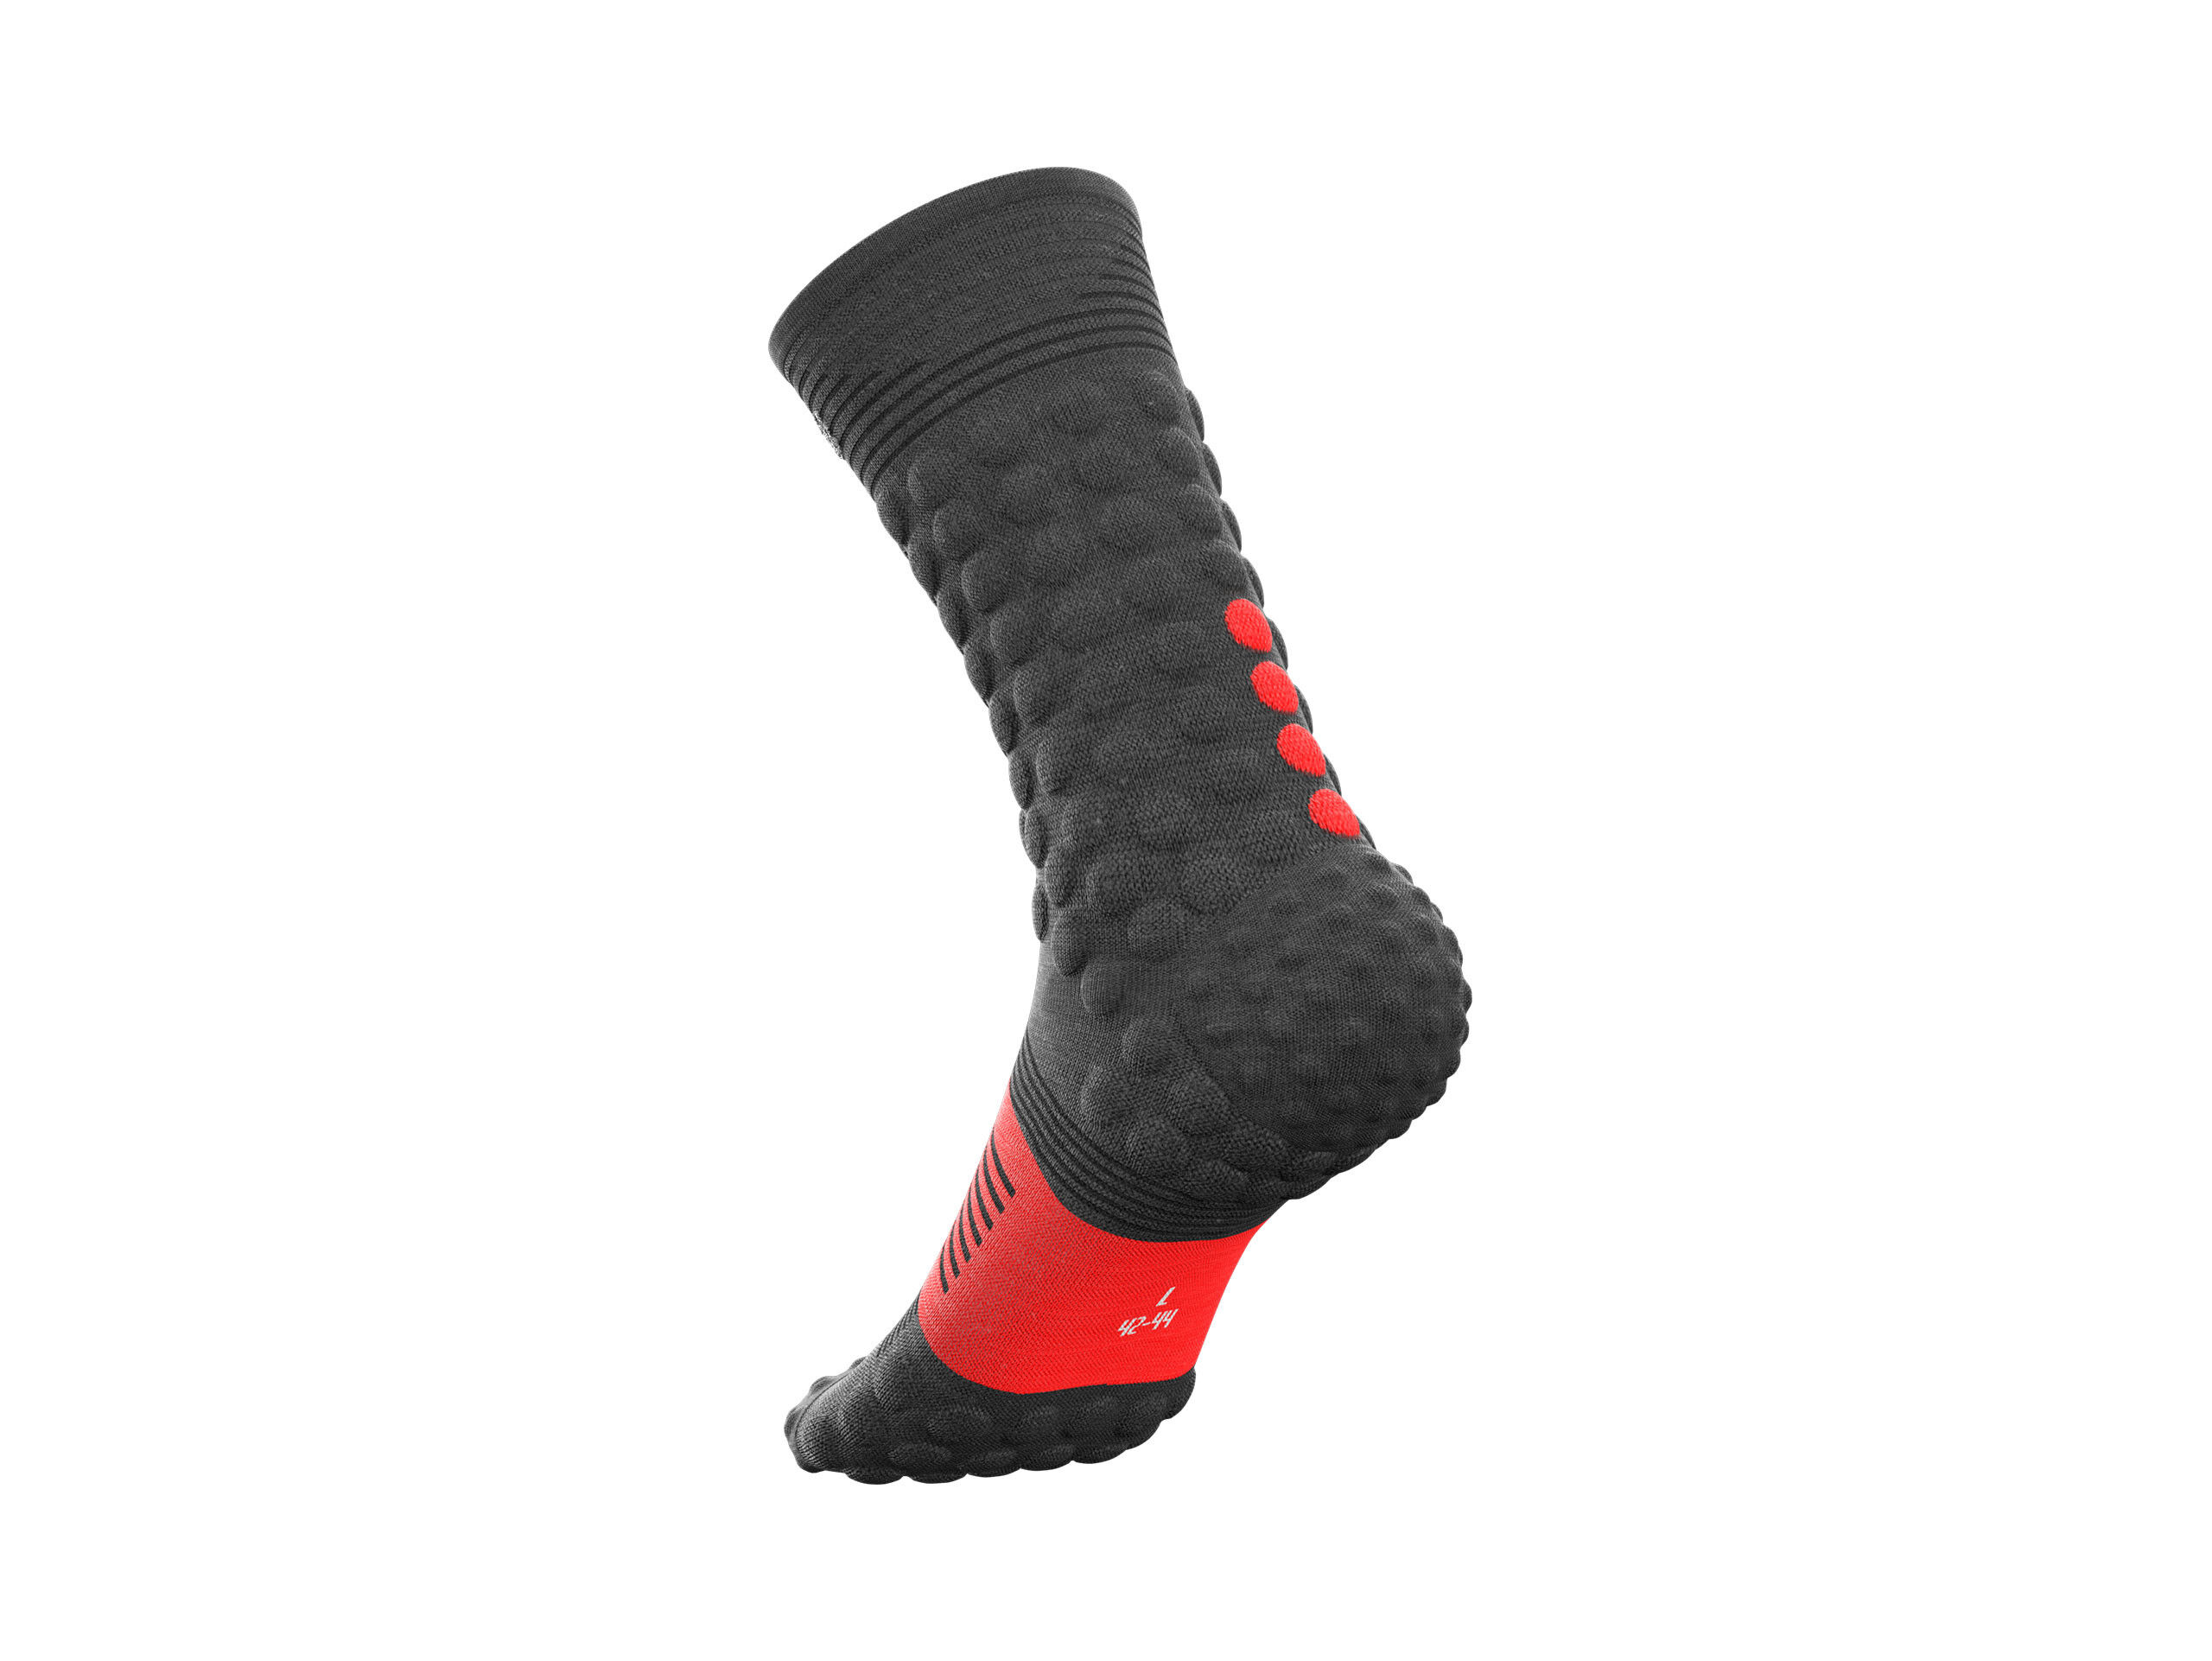 Compressport Pro Racing Socks v3.0 - Winter Run - Calze